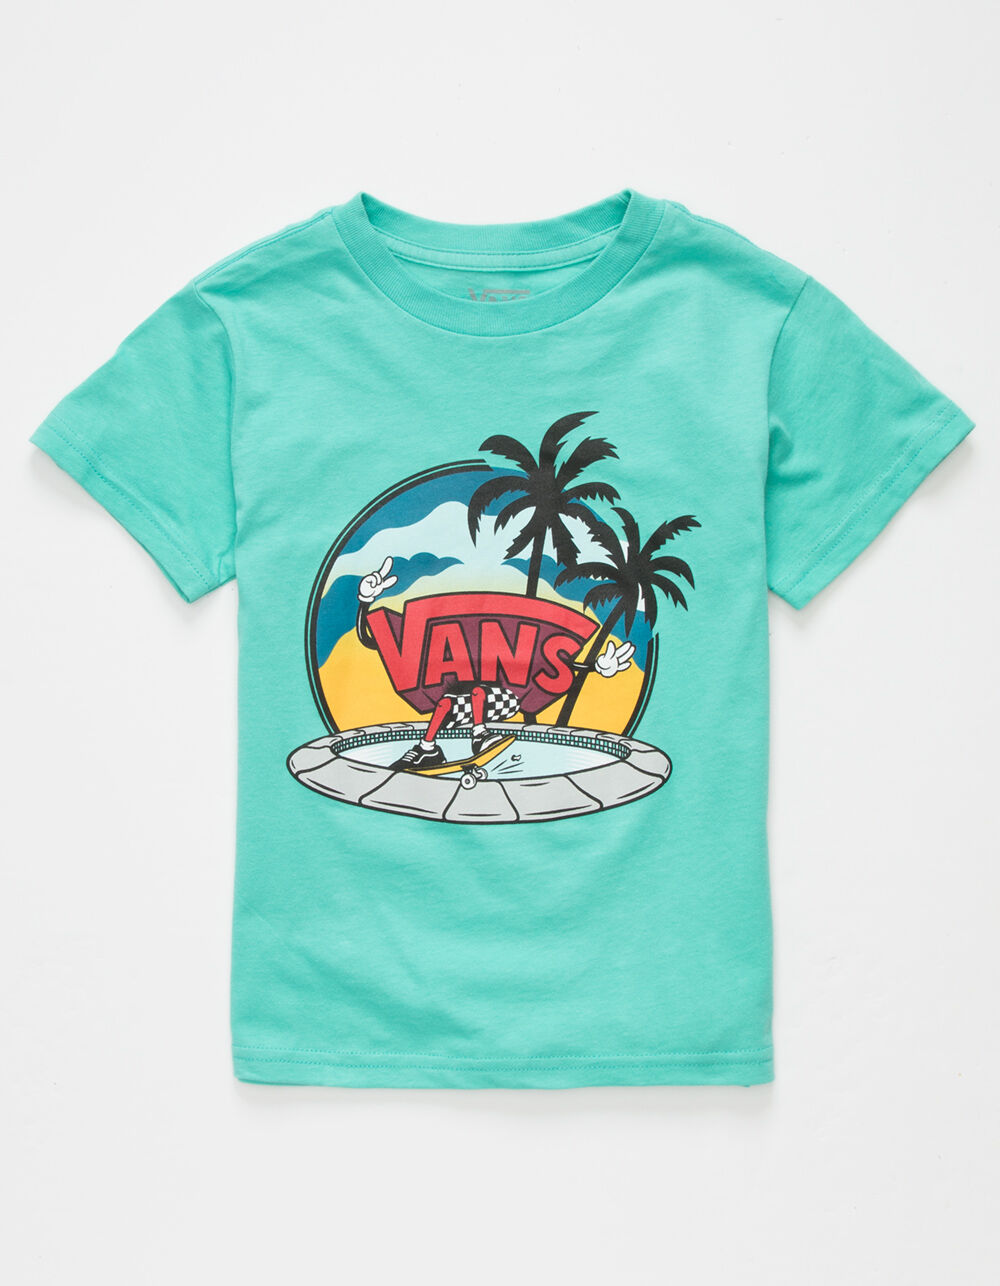 VANS Dual Palm Grind Little Boys T-Shirt (4-7) - MINT | Tillys